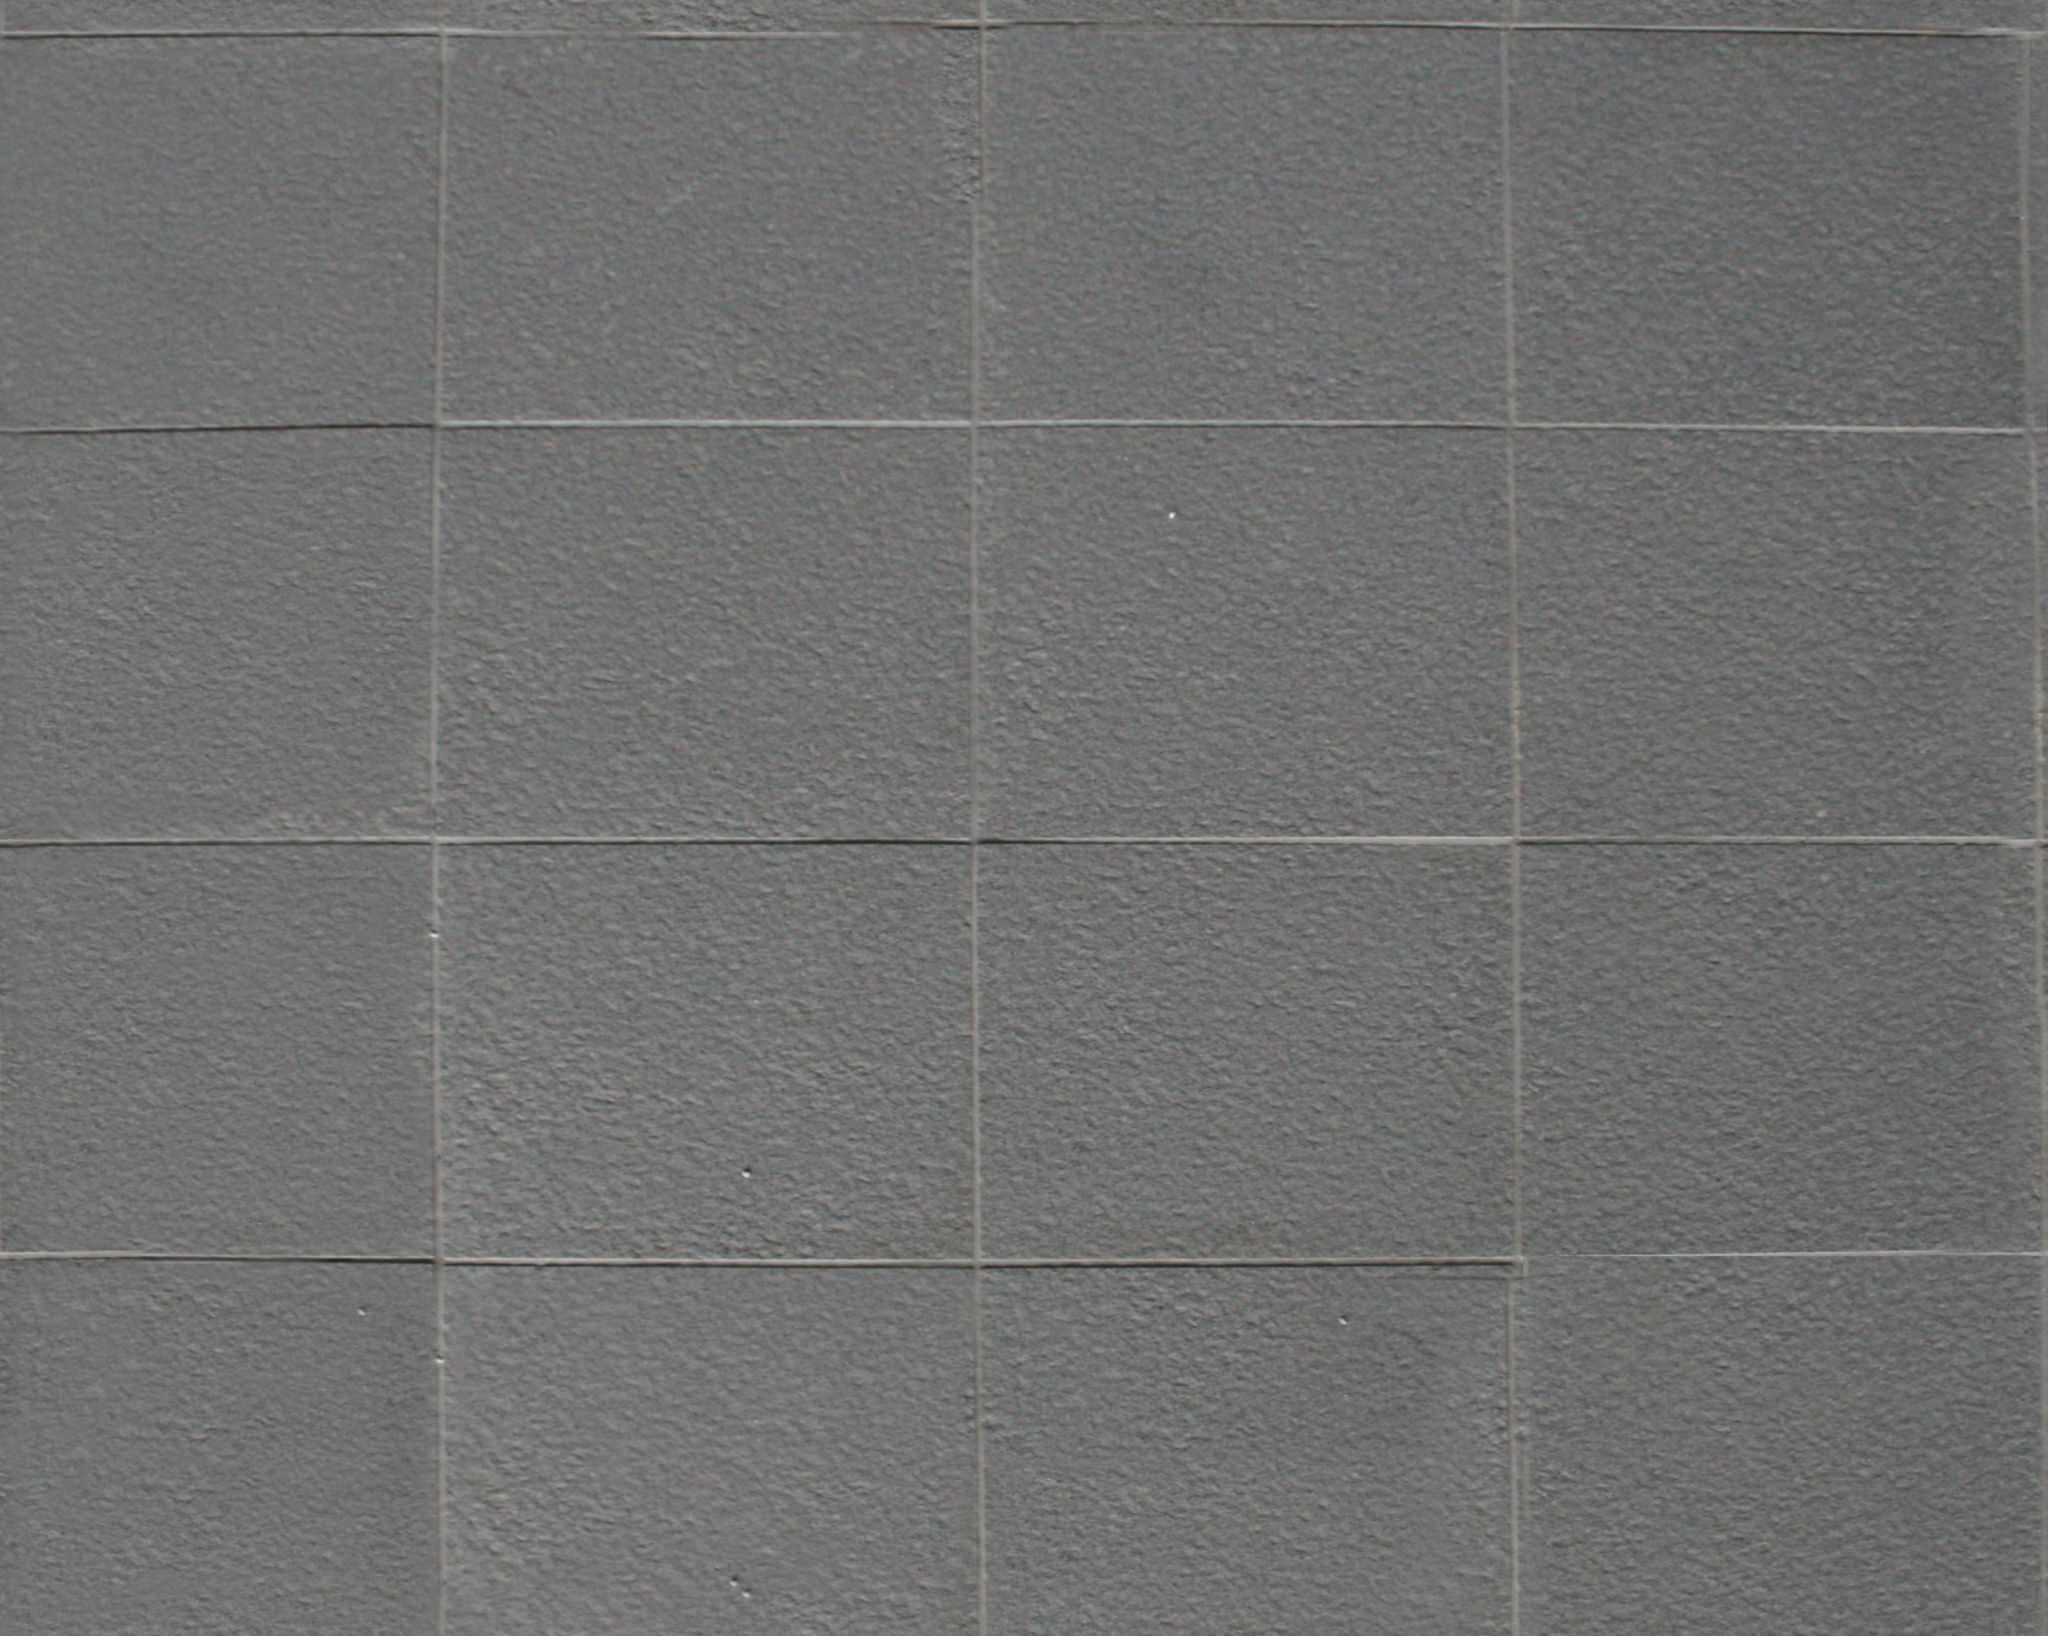 tileable texture tiles with Grey Paving normalmap Tiles Texture  Seamless